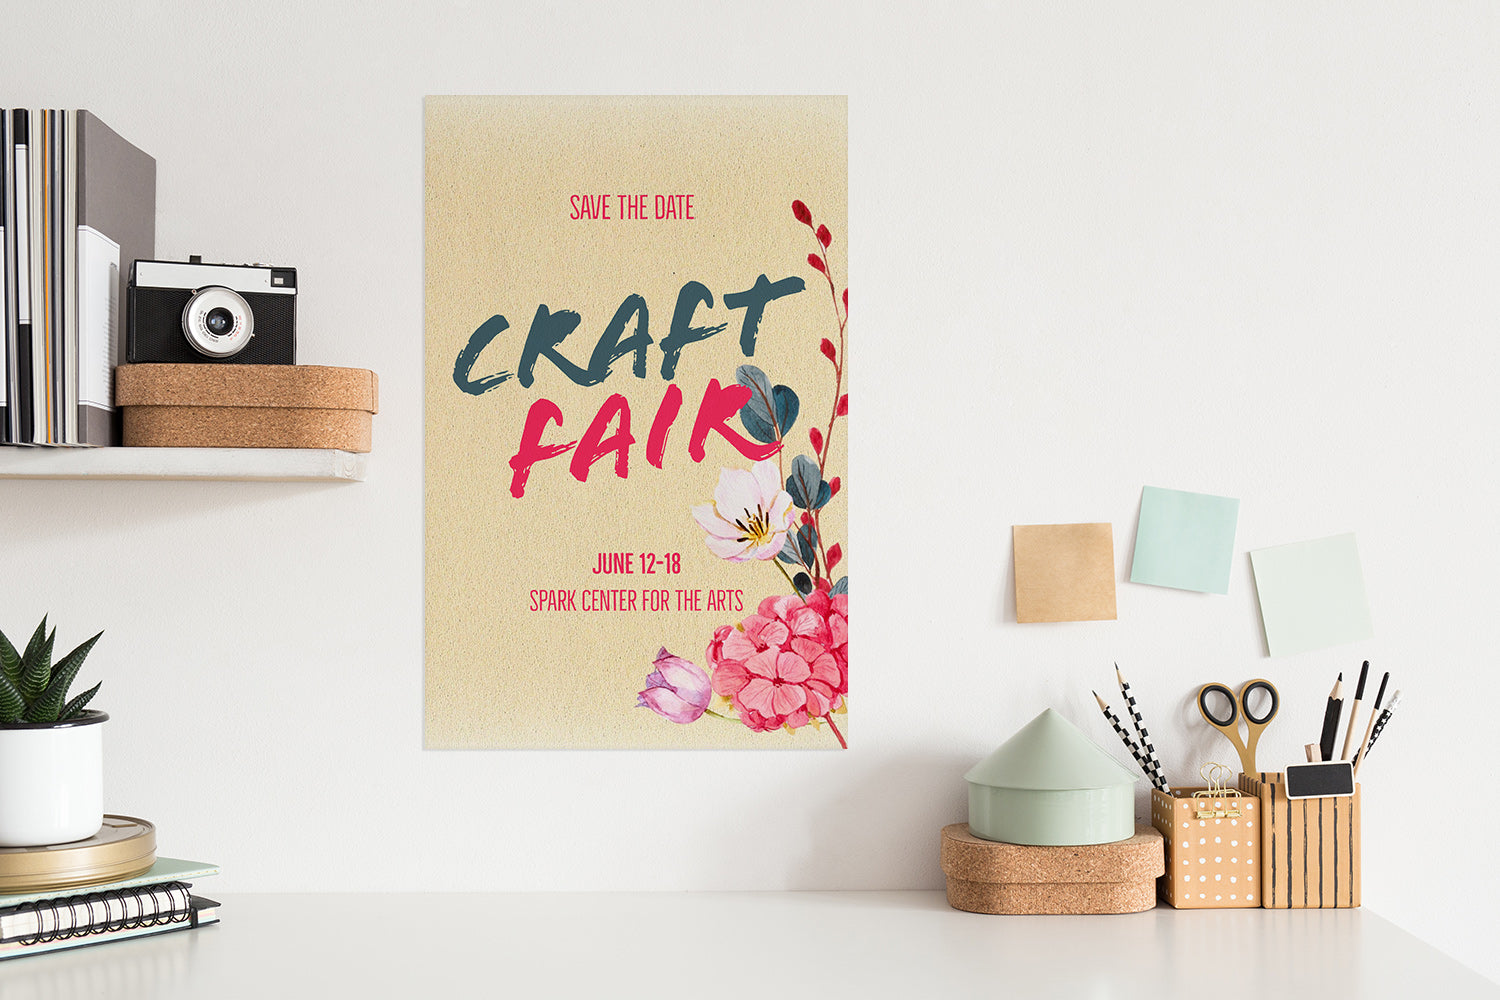 Craft Fair Poster Print on Display 